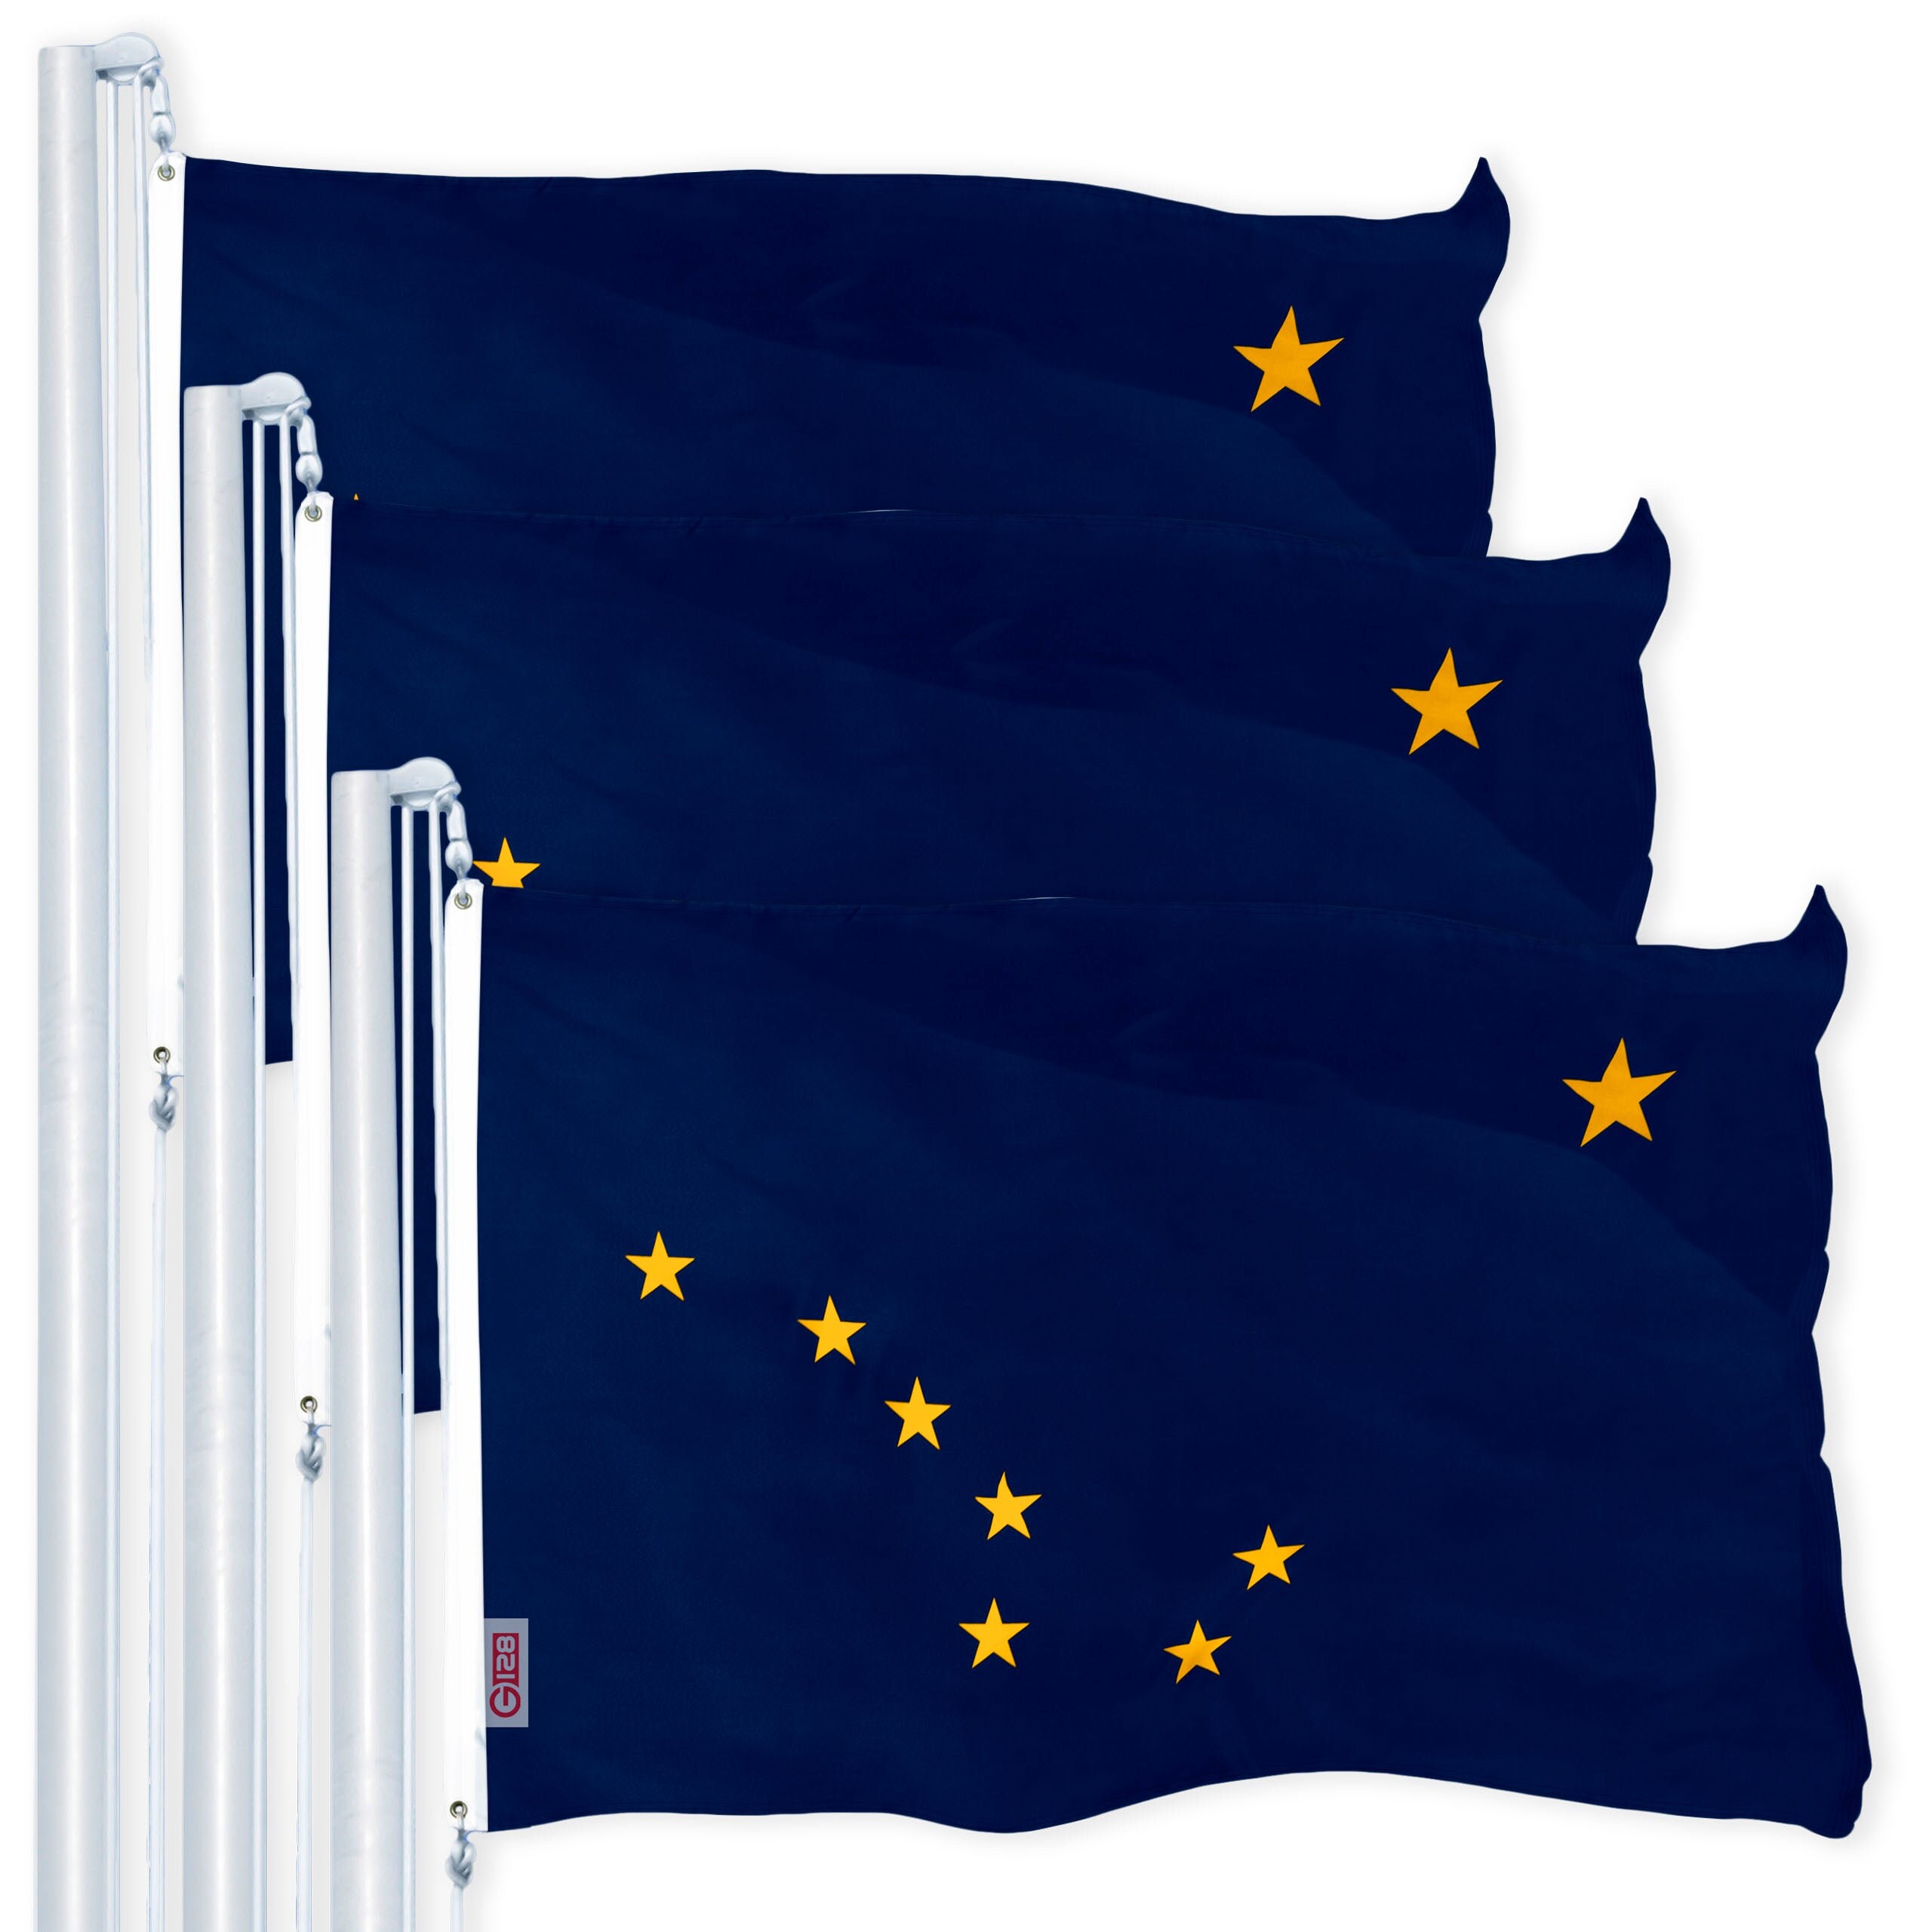 Size Unique Design Print High Quality Materials Flag of Alaska State 3x5 Ft / 90x150 cm Made in EU